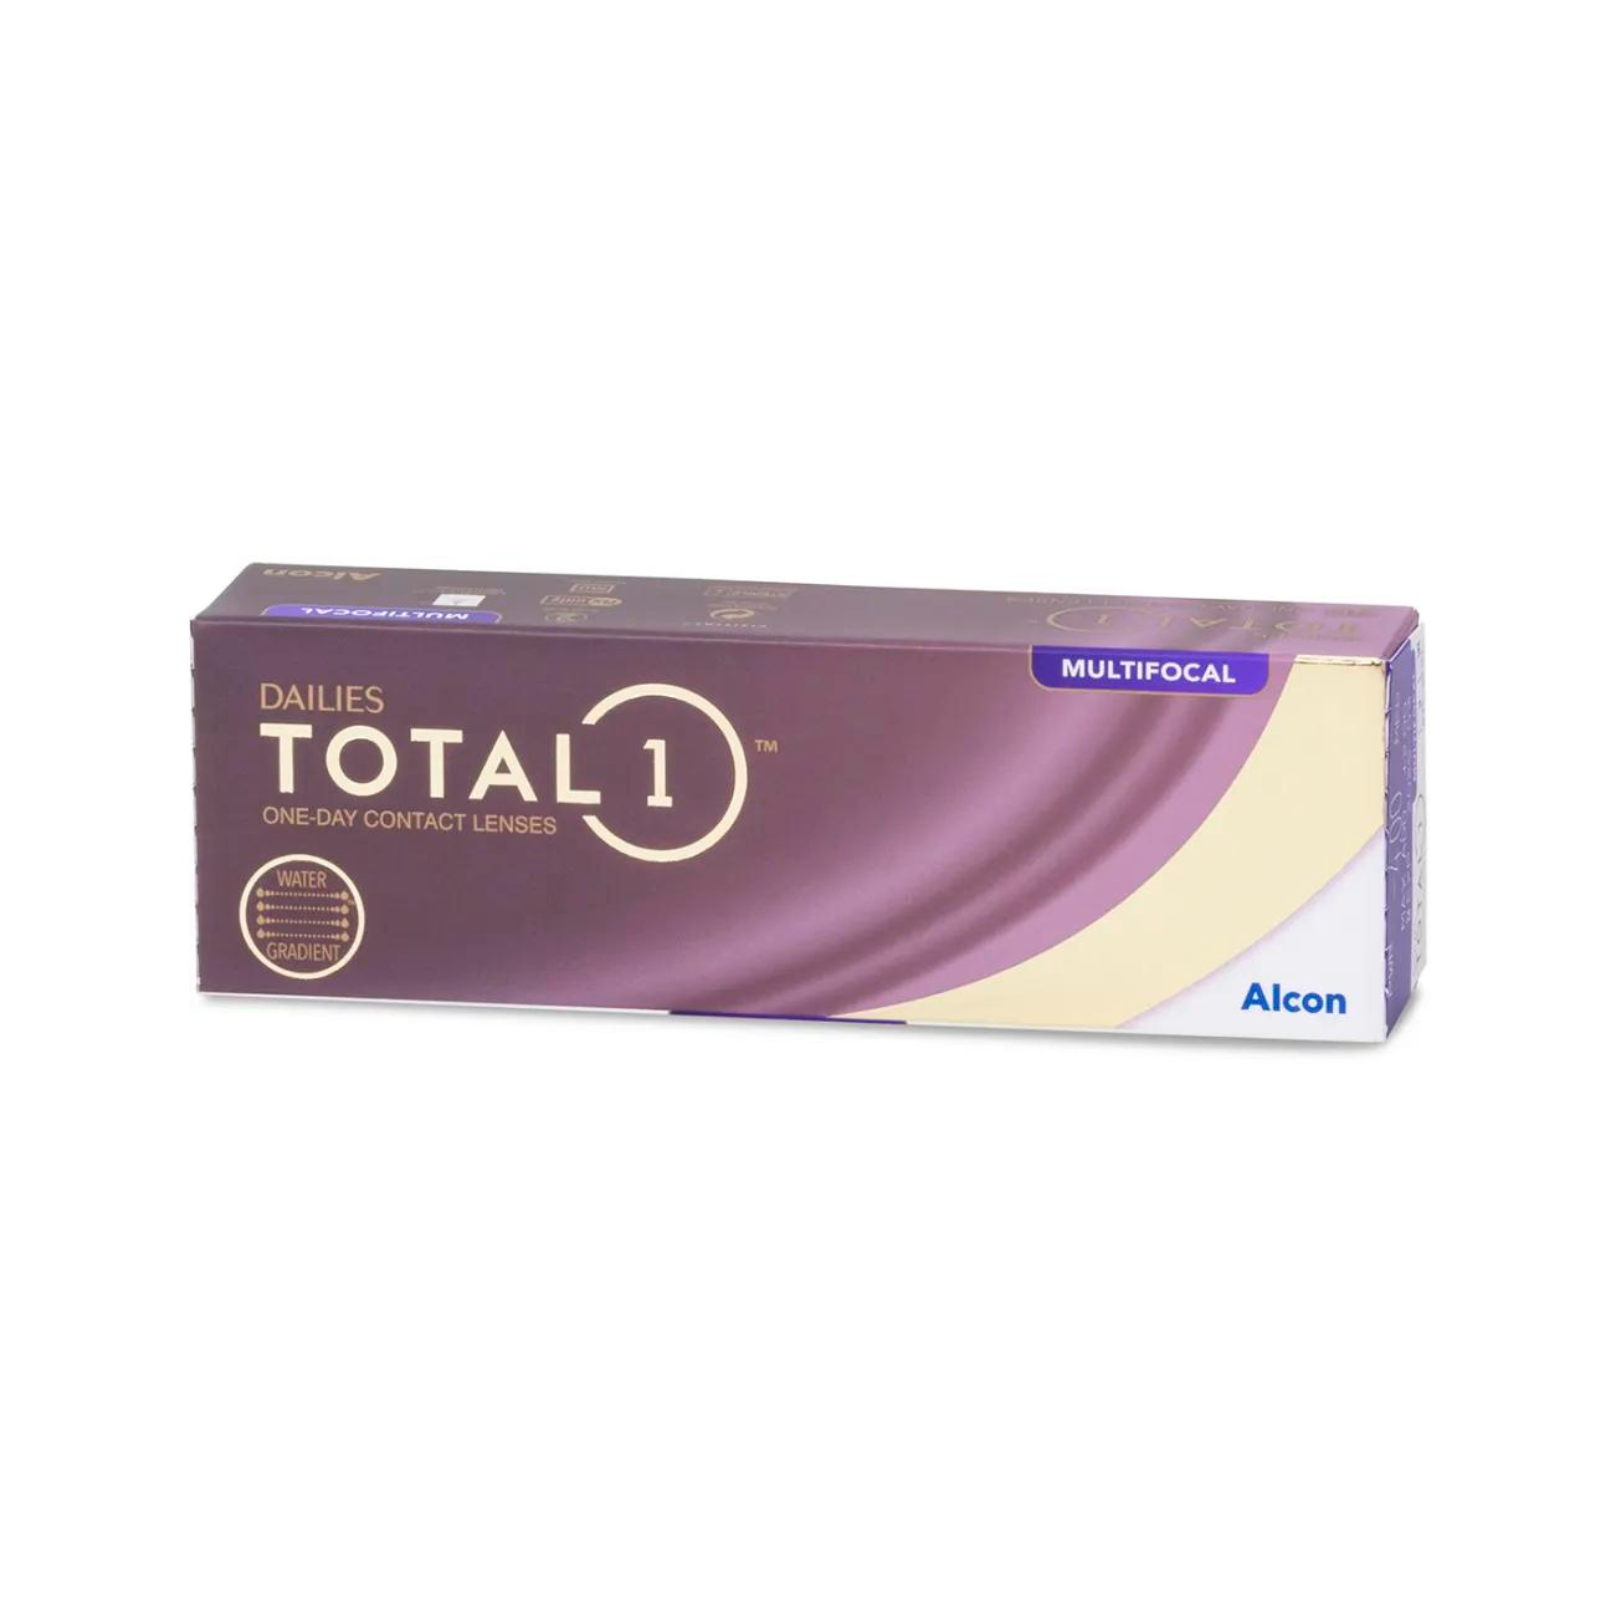 Dailies Total 1 Multifocal, daily lenses - 30 / 90 pack